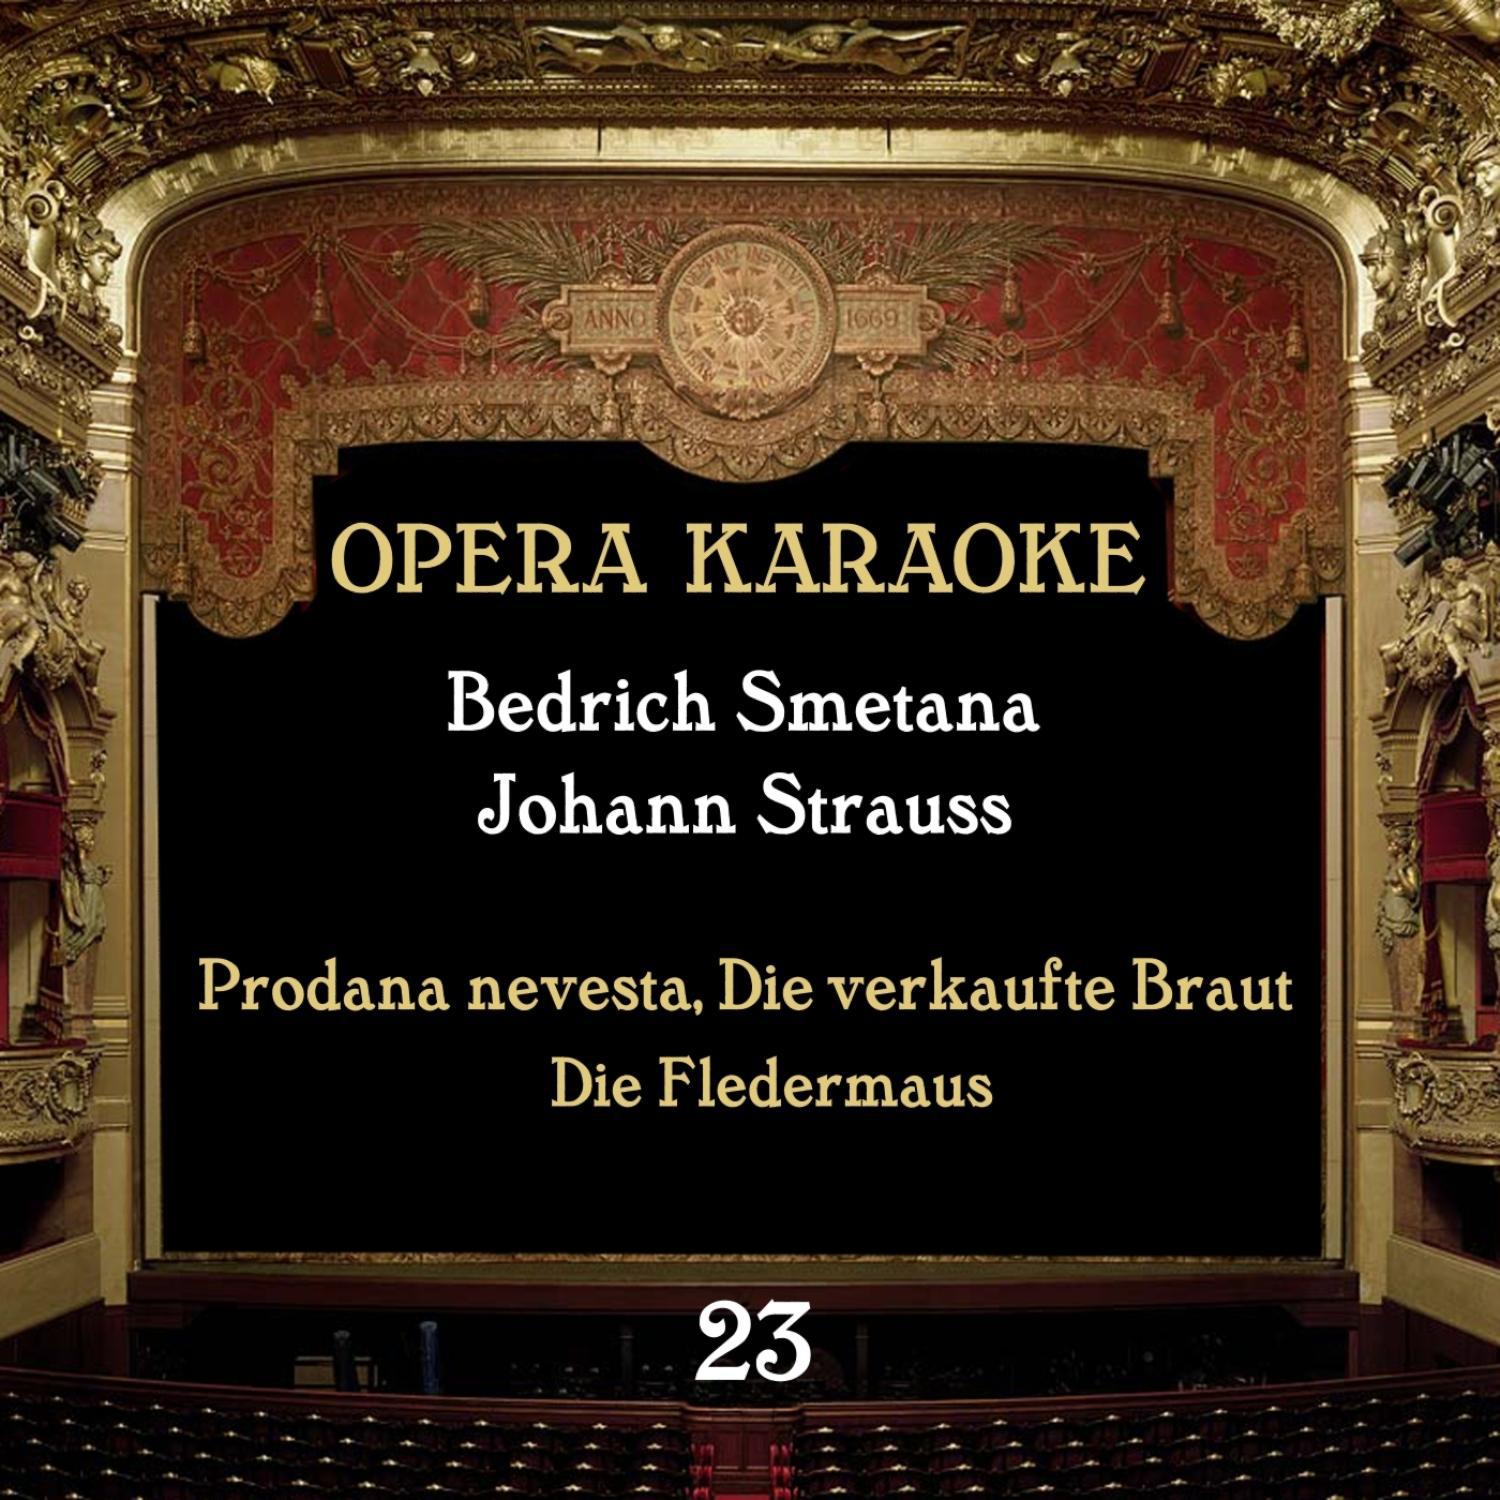 Opera Karaoke, Vol. 23 [Bedrich Smetana, Johann Strauss]